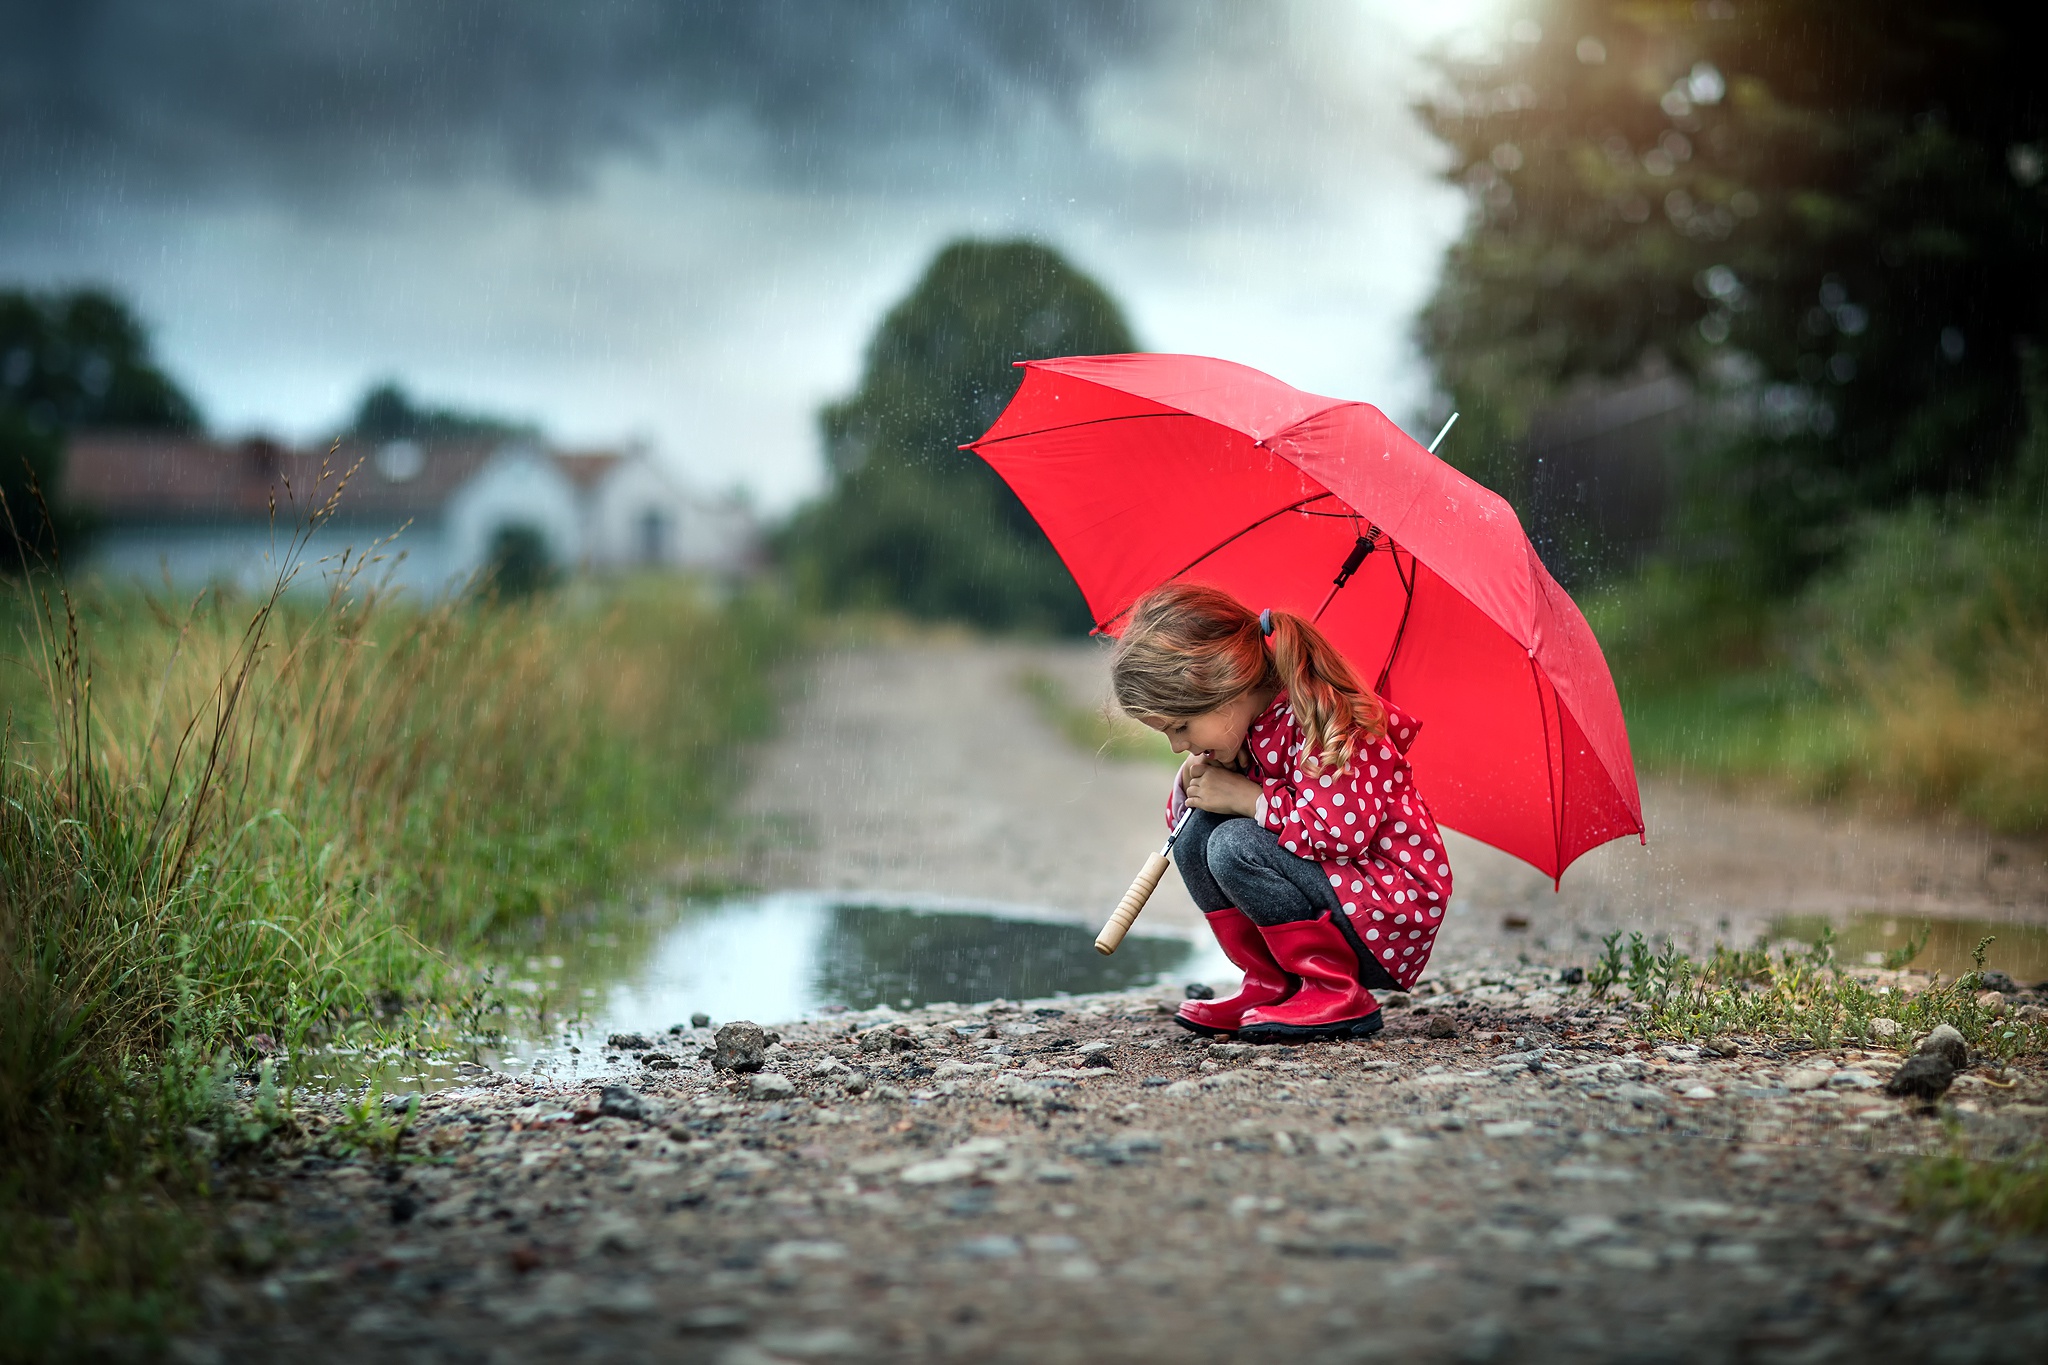 Зонтик сидит. Девочка с зонтиком. Под зонтиком. Природа дождь. Девочка под зонтиком.